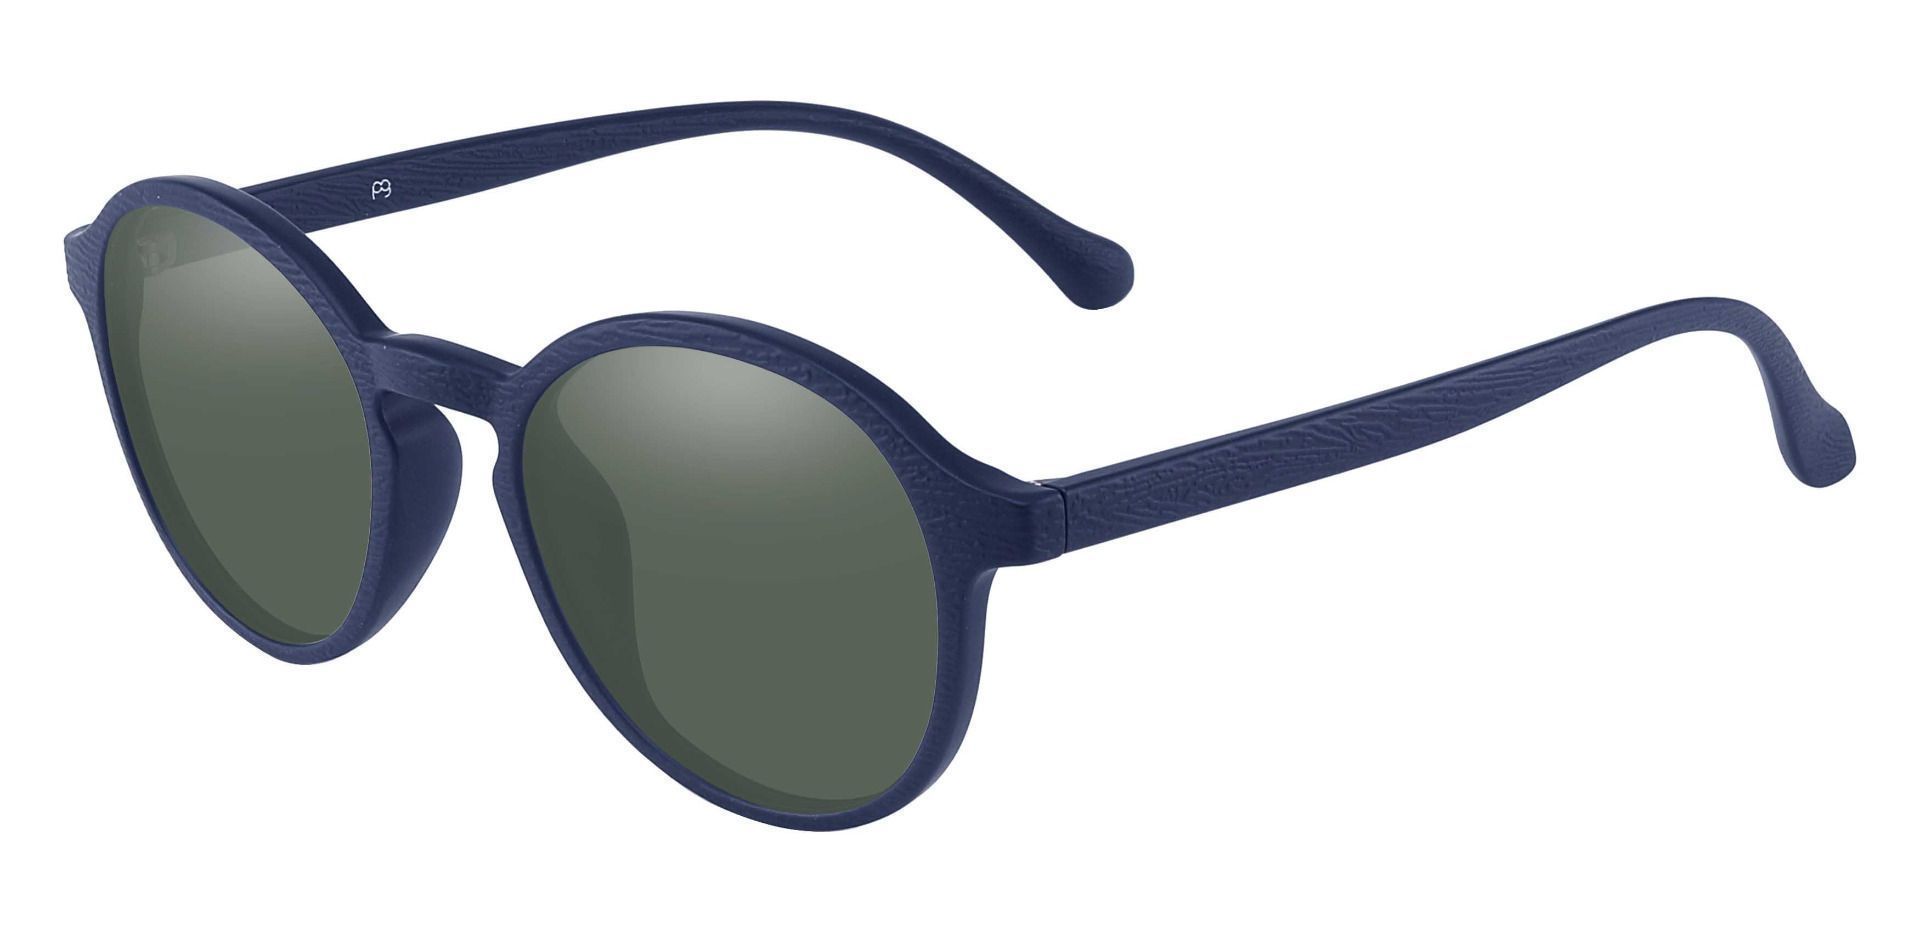 Whitney Round Prescription Sunglasses - Blue Frame With Green Lenses